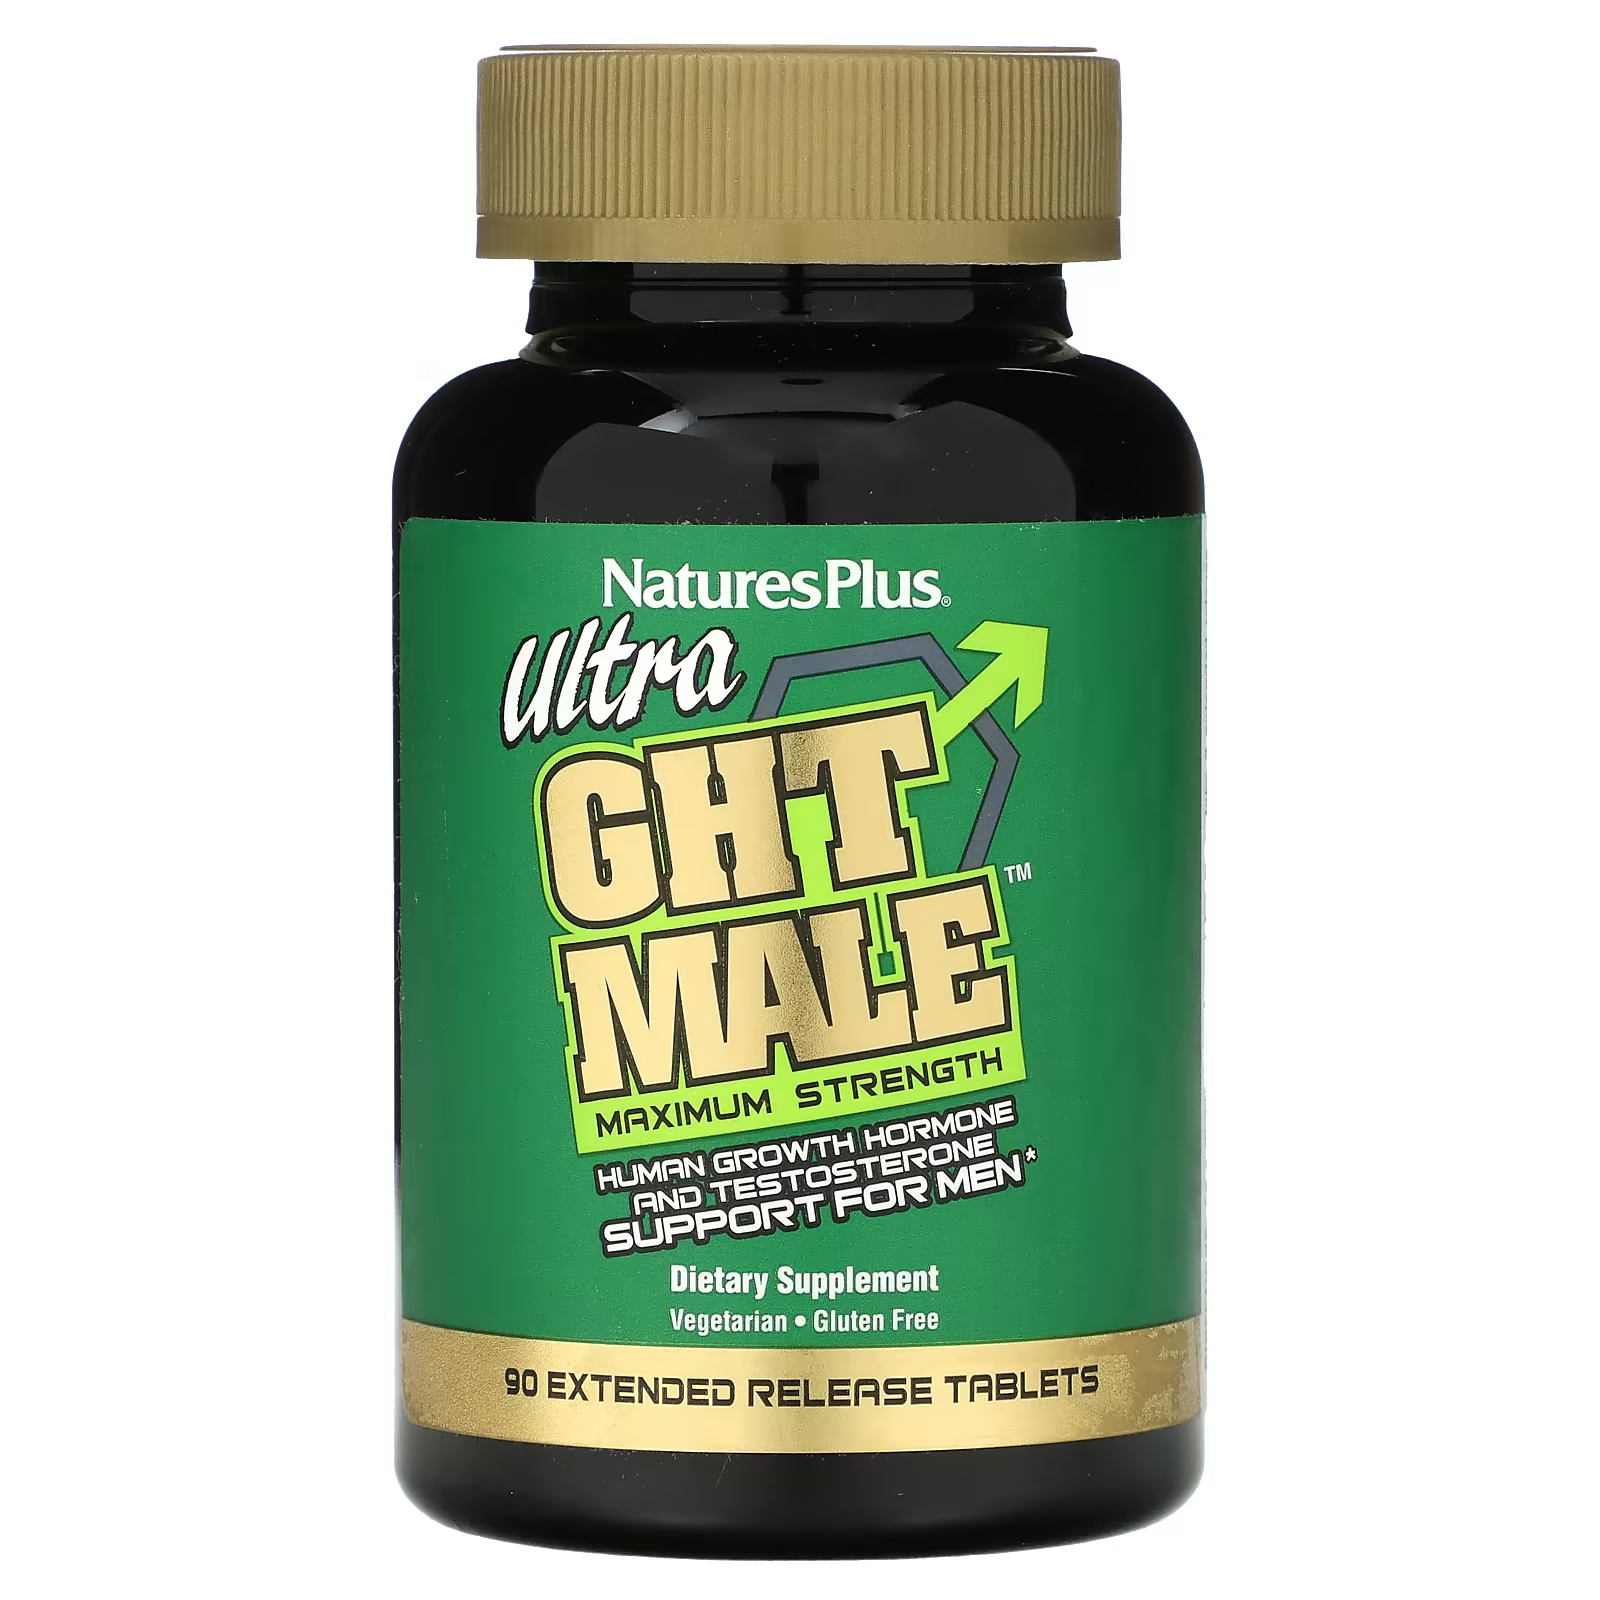 Пищевая добавка NaturesPlus Ultra GHT Male для мужчин, 90 таблеток пищевая добавка ultra garlite naturesplus пролонгированного действия 90 таблеток